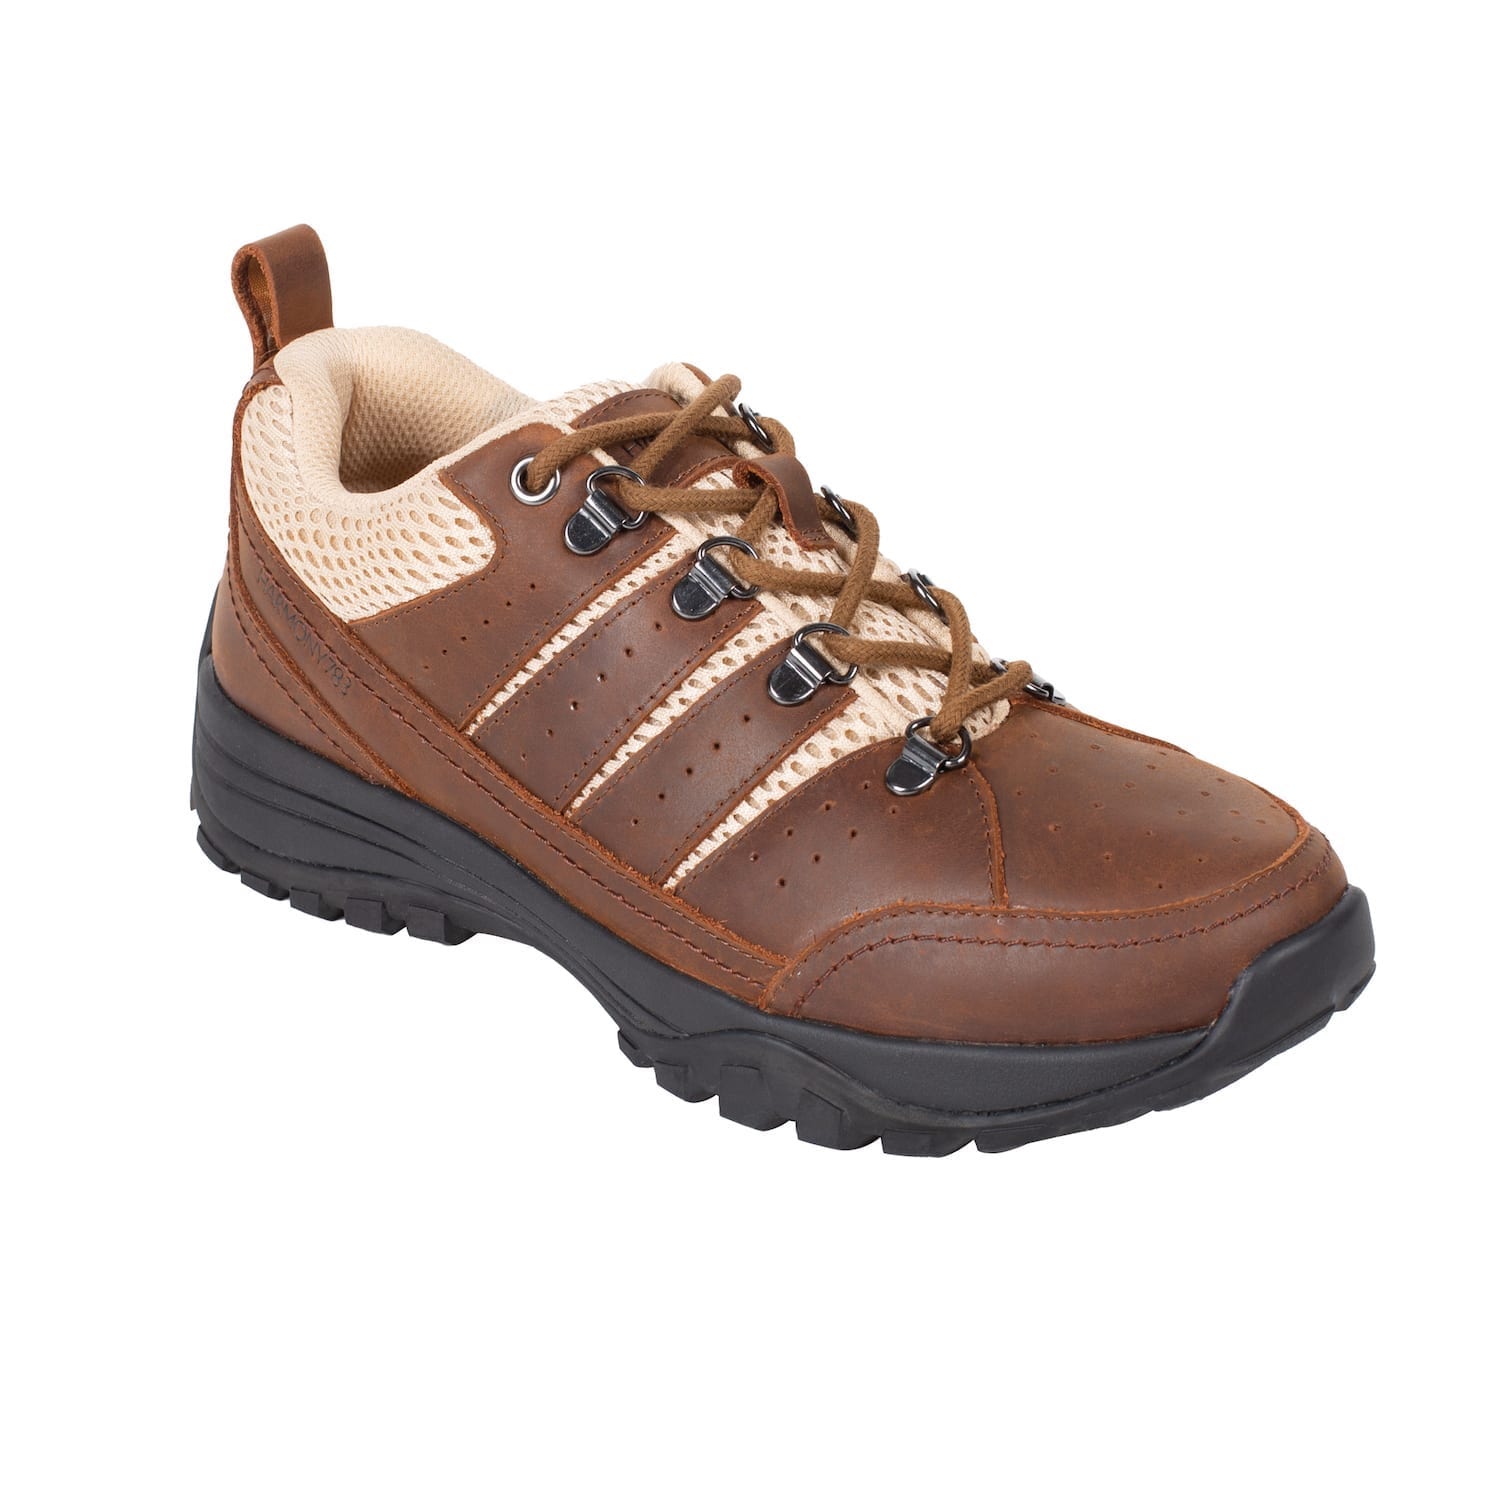 Trail Shoe • Bailey Brown Leather & Crème Mesh